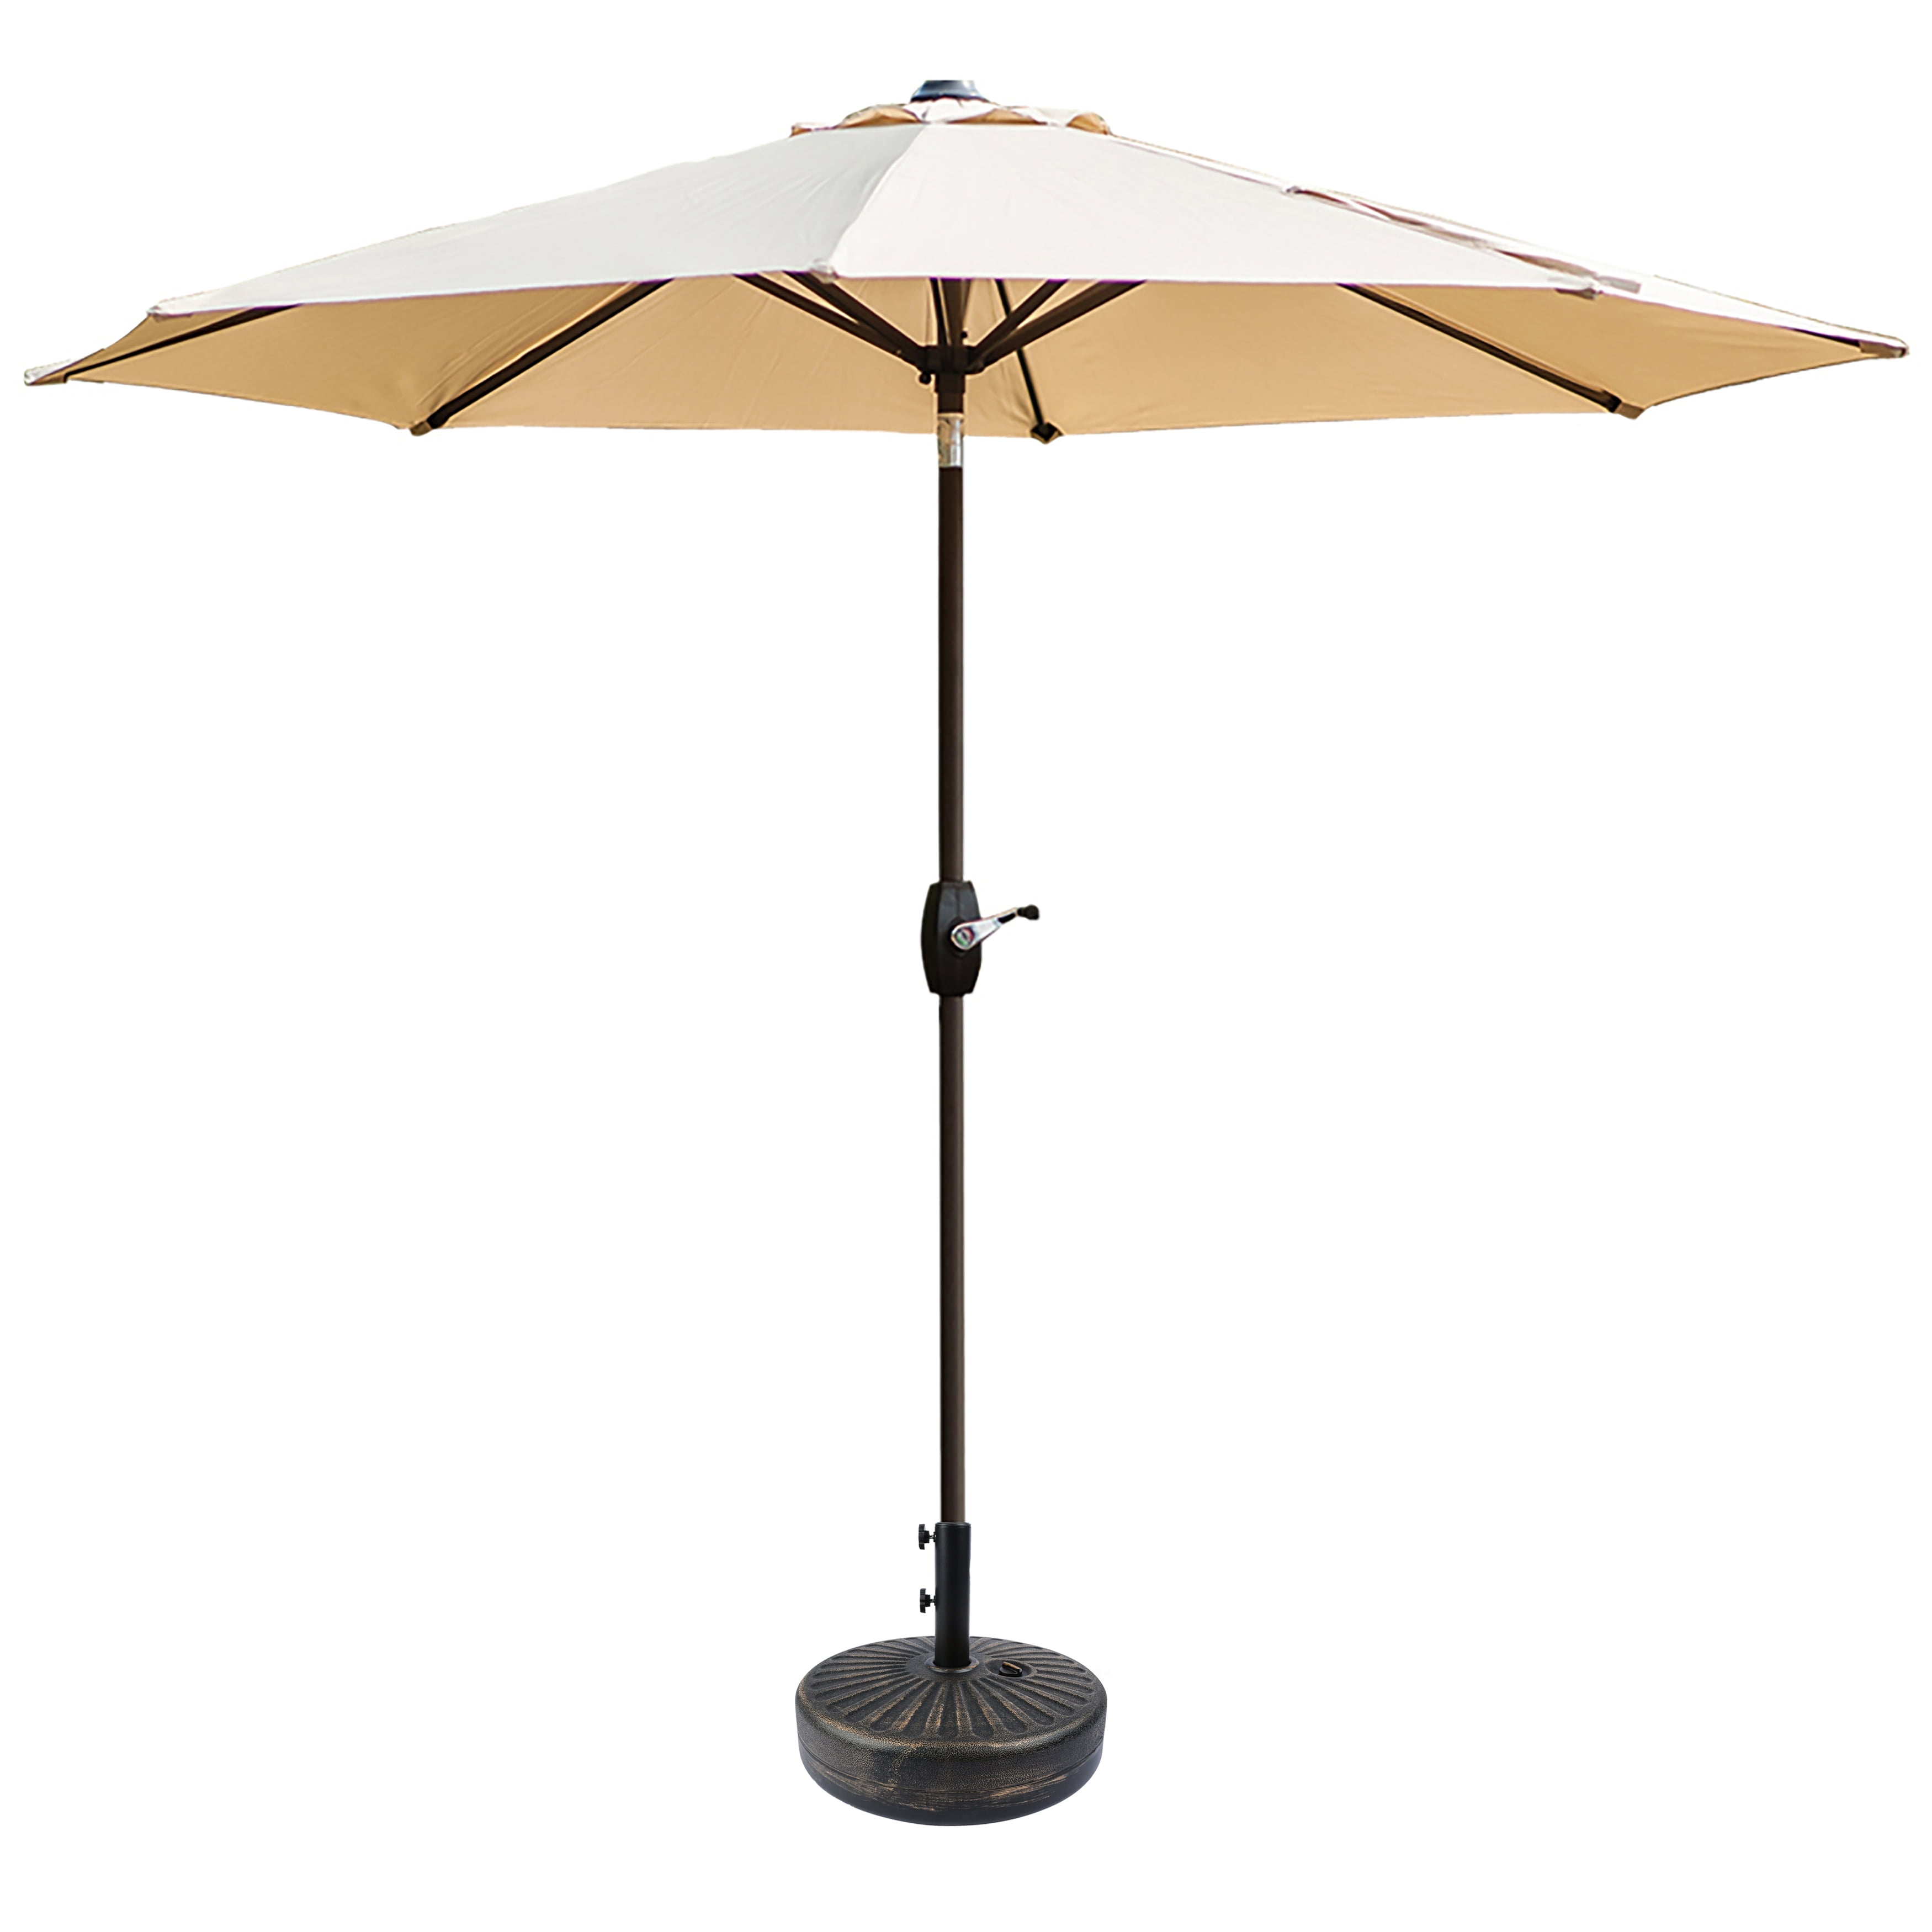 Aldo 9 Ft Market Outdoor Patio Umbrella With Round Bronze Base Beige